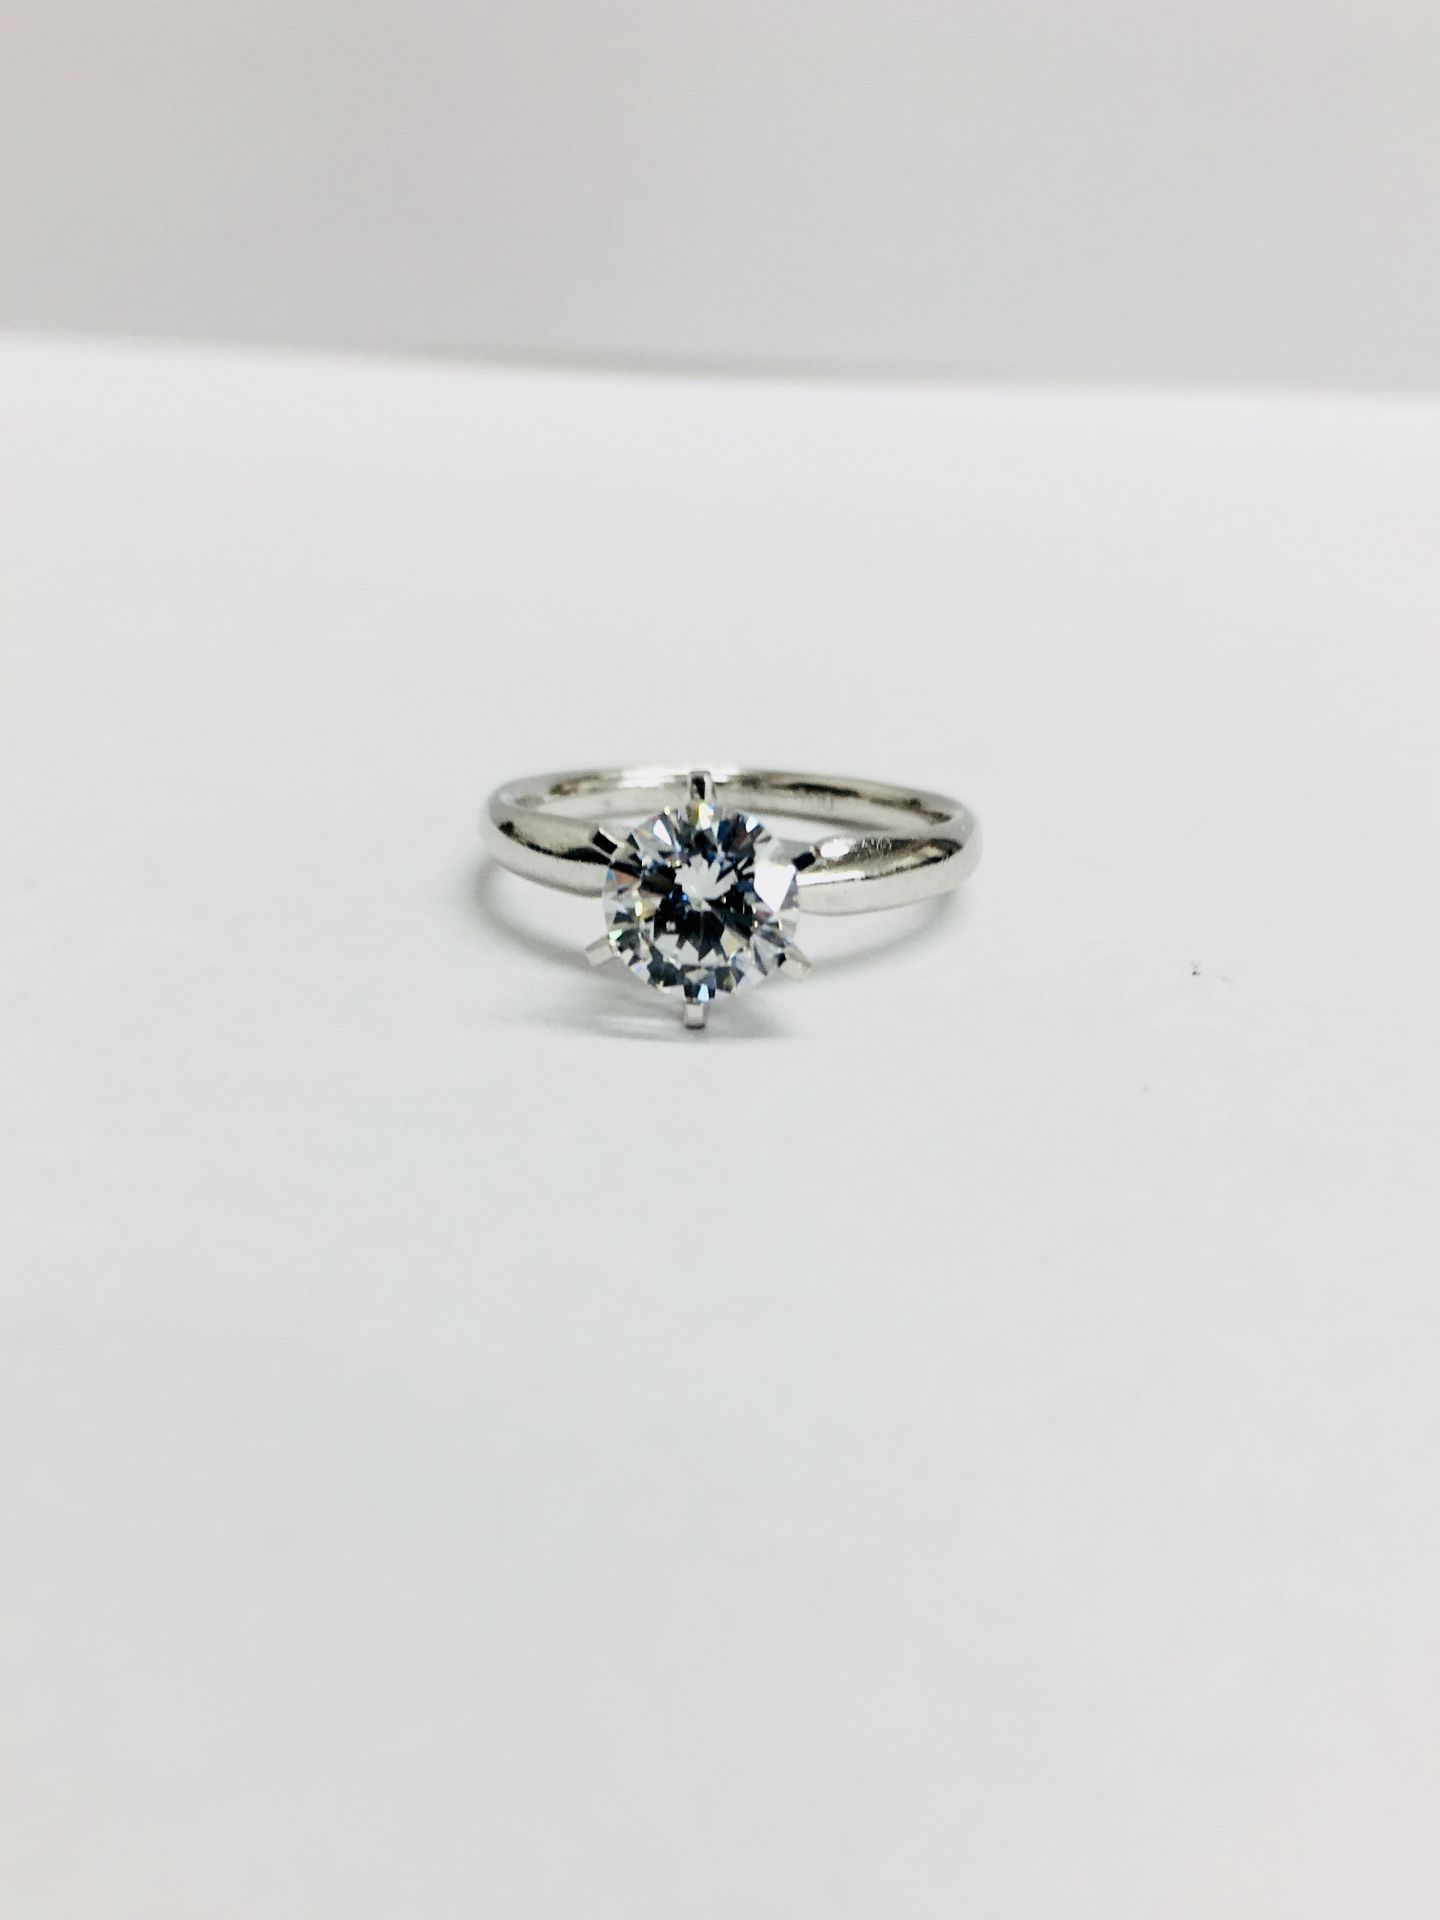 Platinum diamond solitaire ring,0.50ct h colour vs clarity diamond brilliant cut natural(clarity